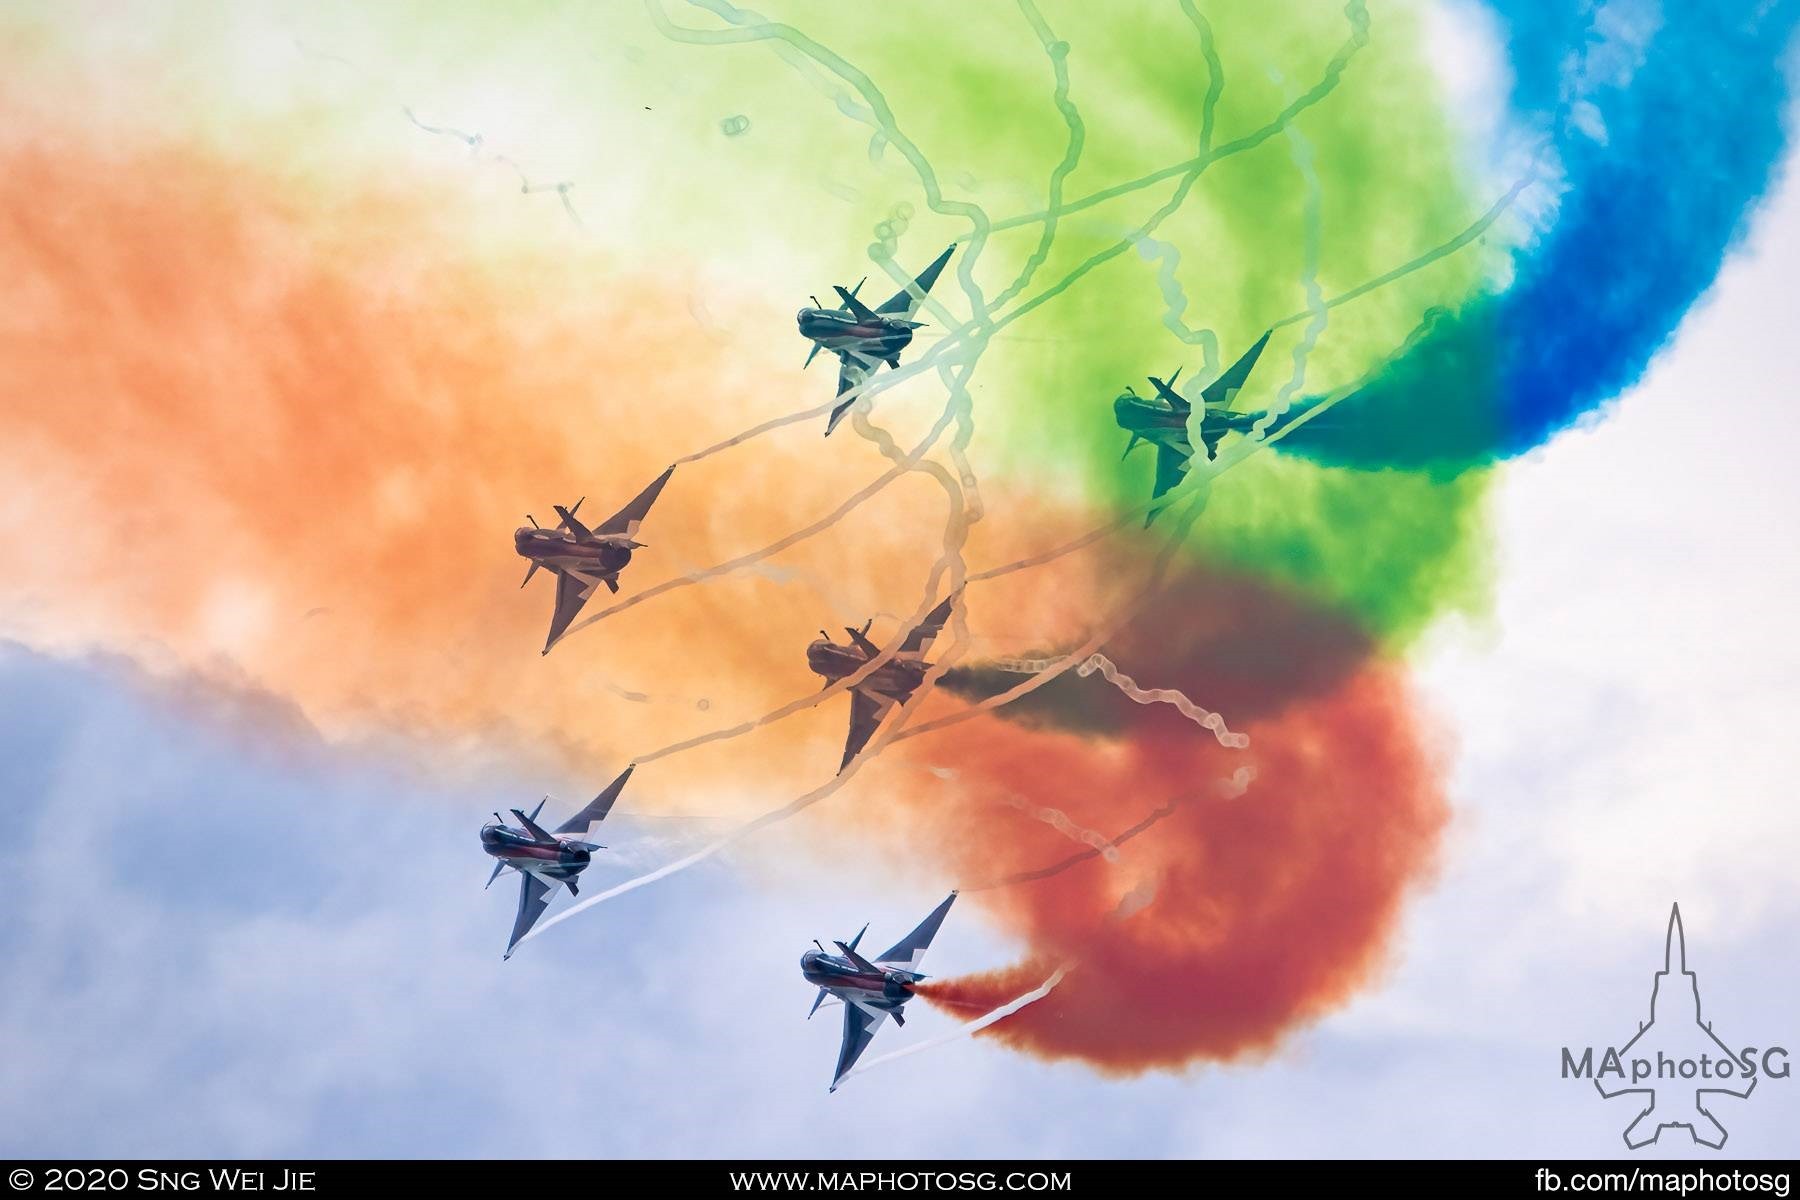 PLAAF Ba Yi Aerobatics Team with their beautiful RGB smoke